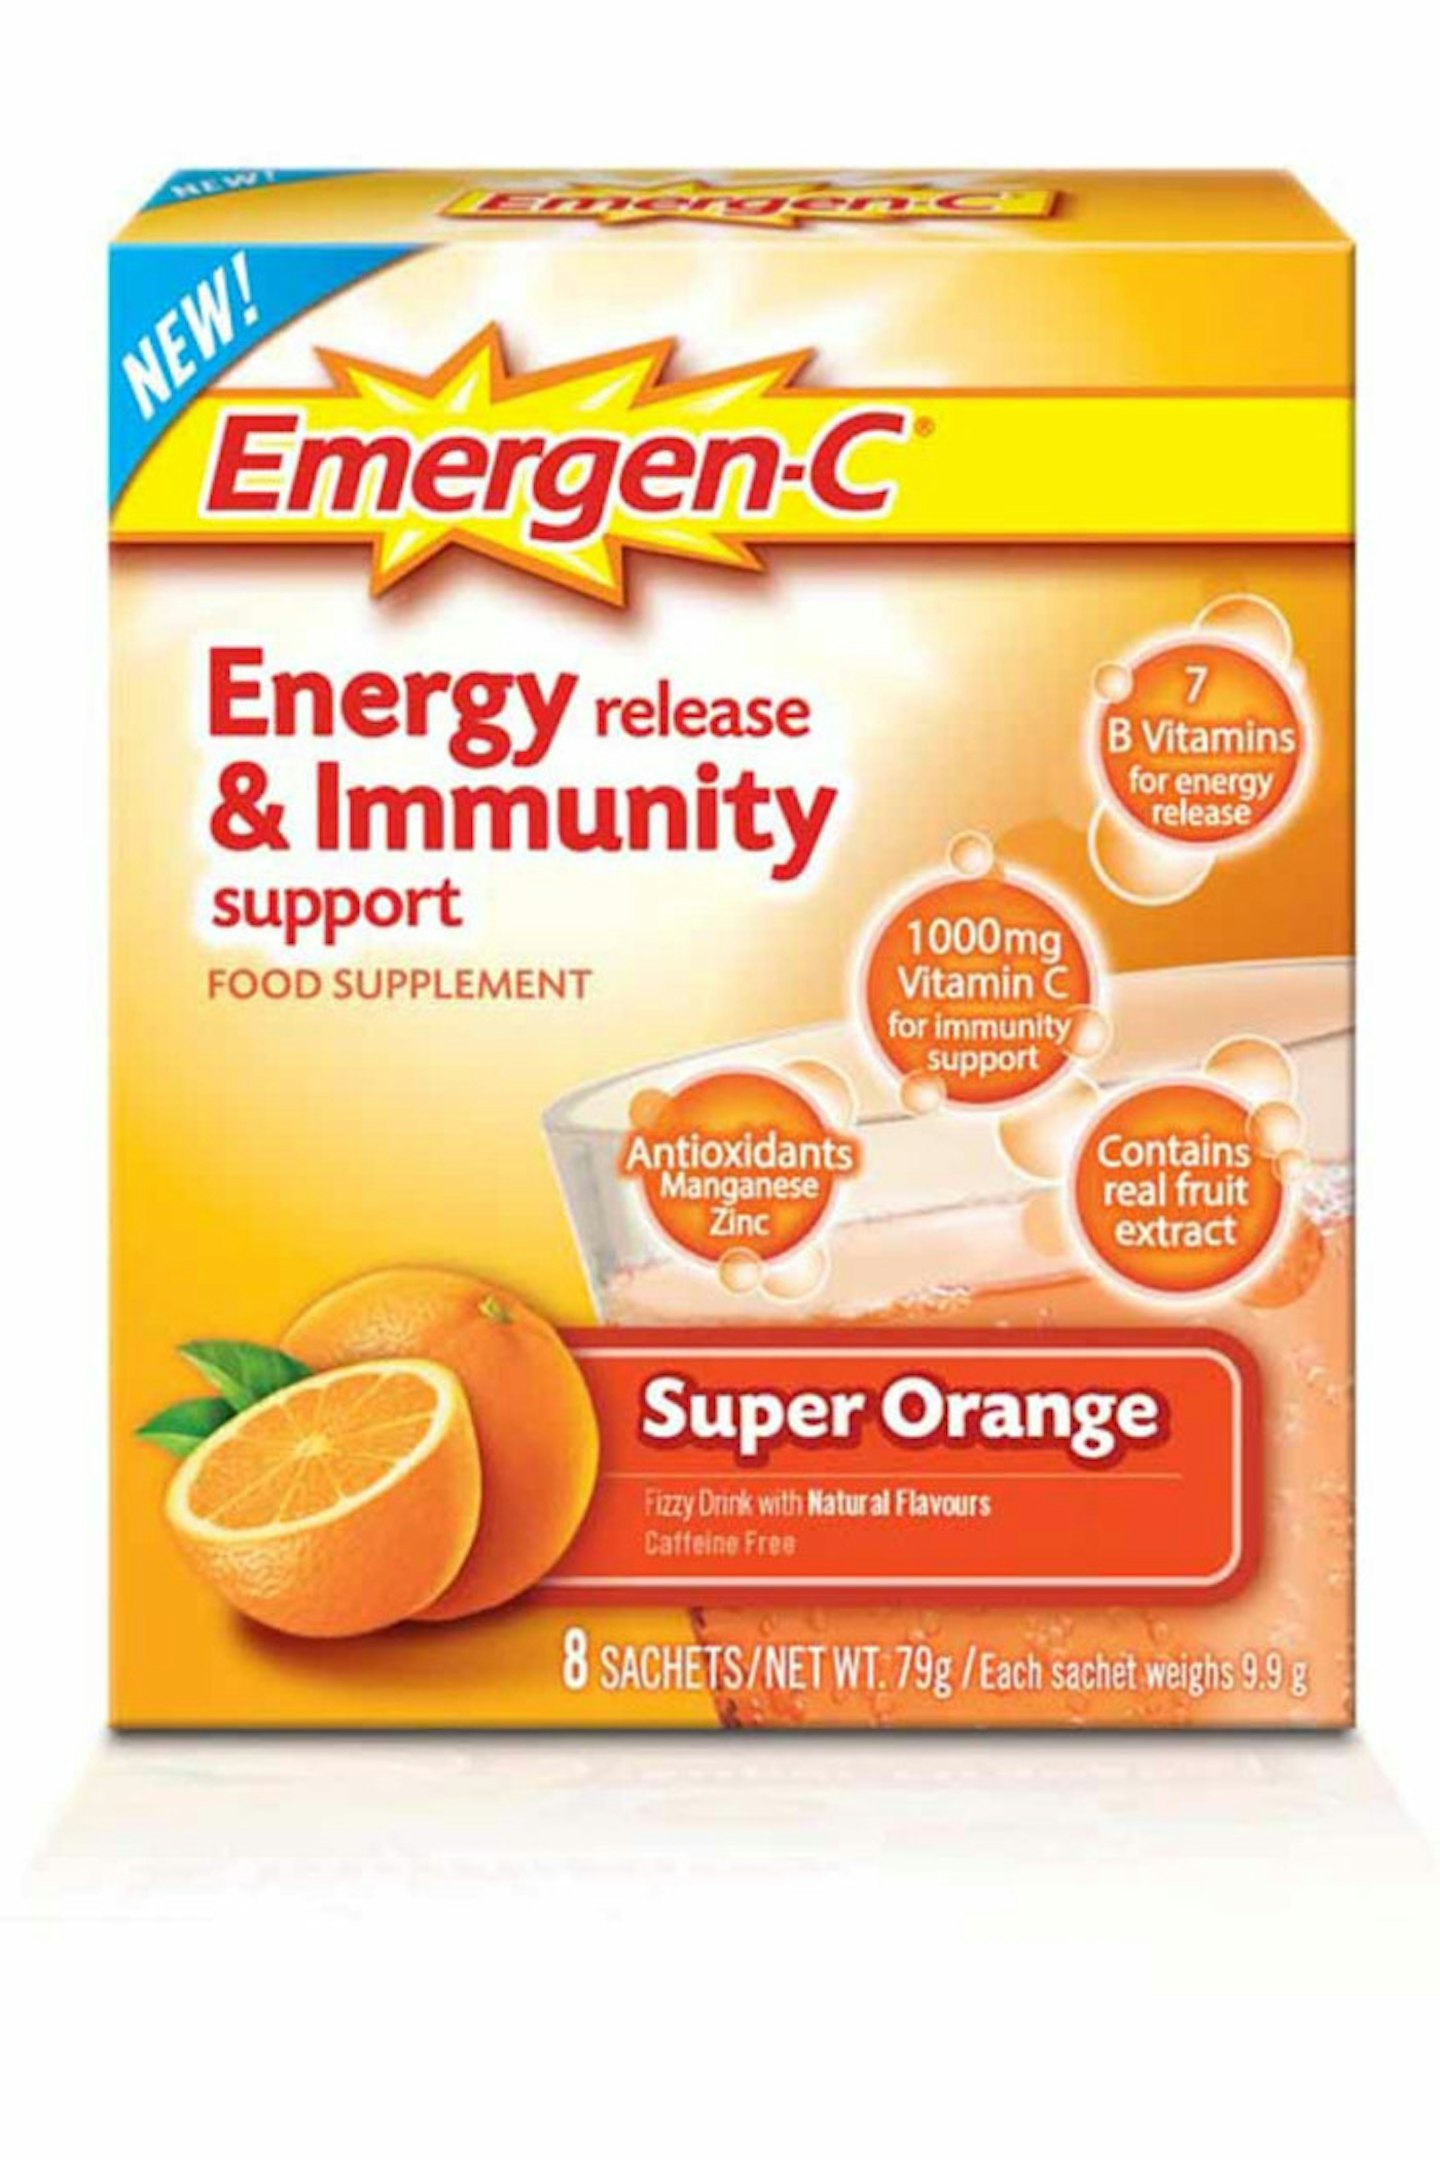 Emegen-C Energy and Immunity Support, £4.99 for 8, Holland & Barrett